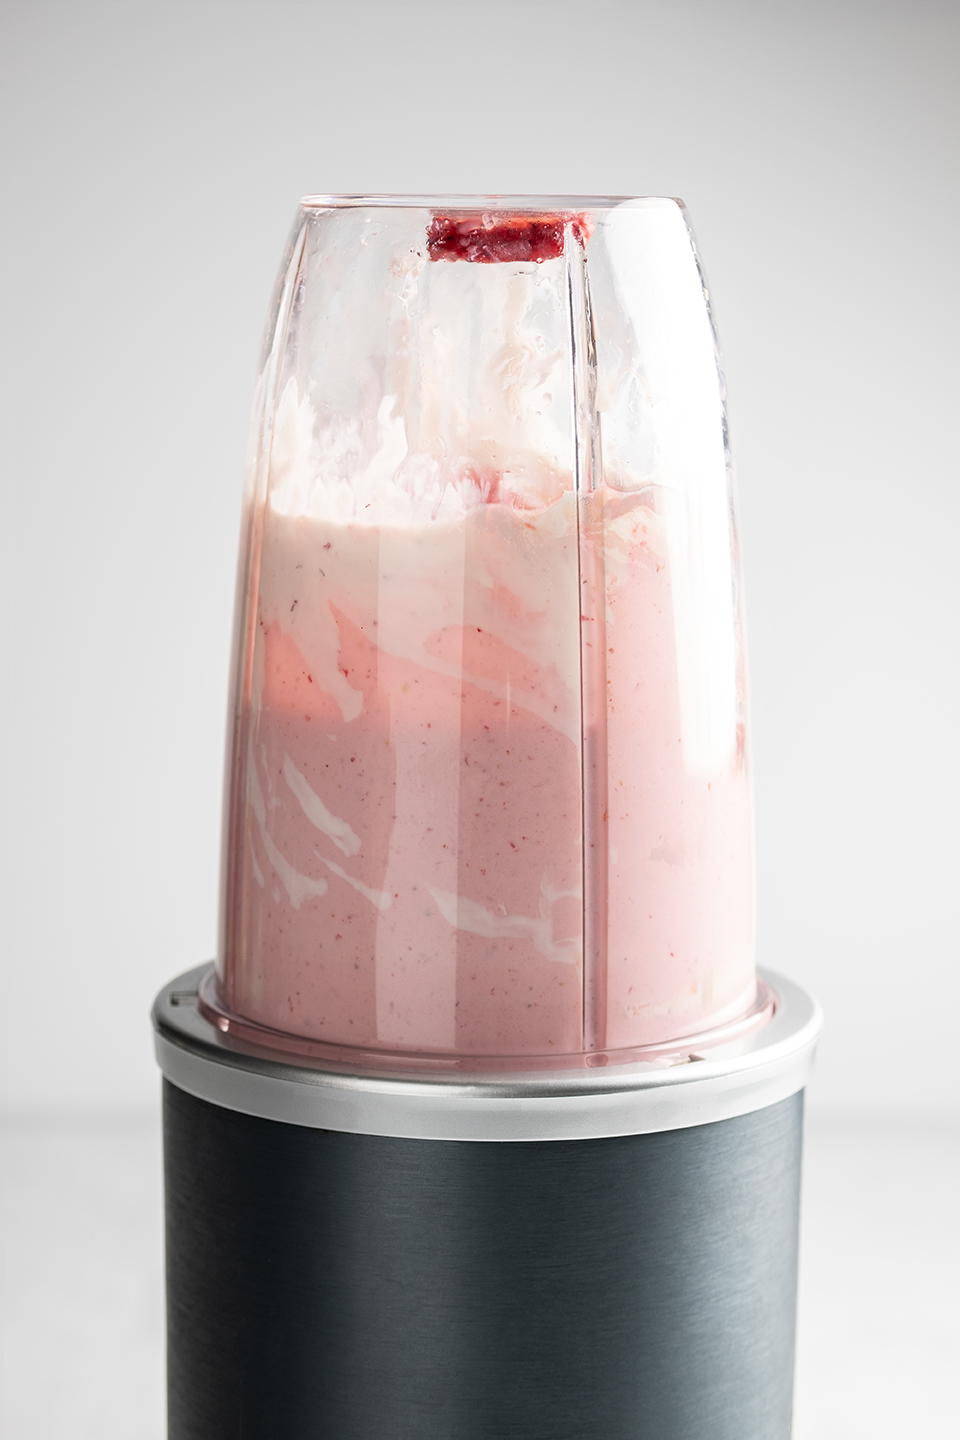 JodiLoves-Stawberry-Yogurt-Parfait-Dessert-blender-after.jpg